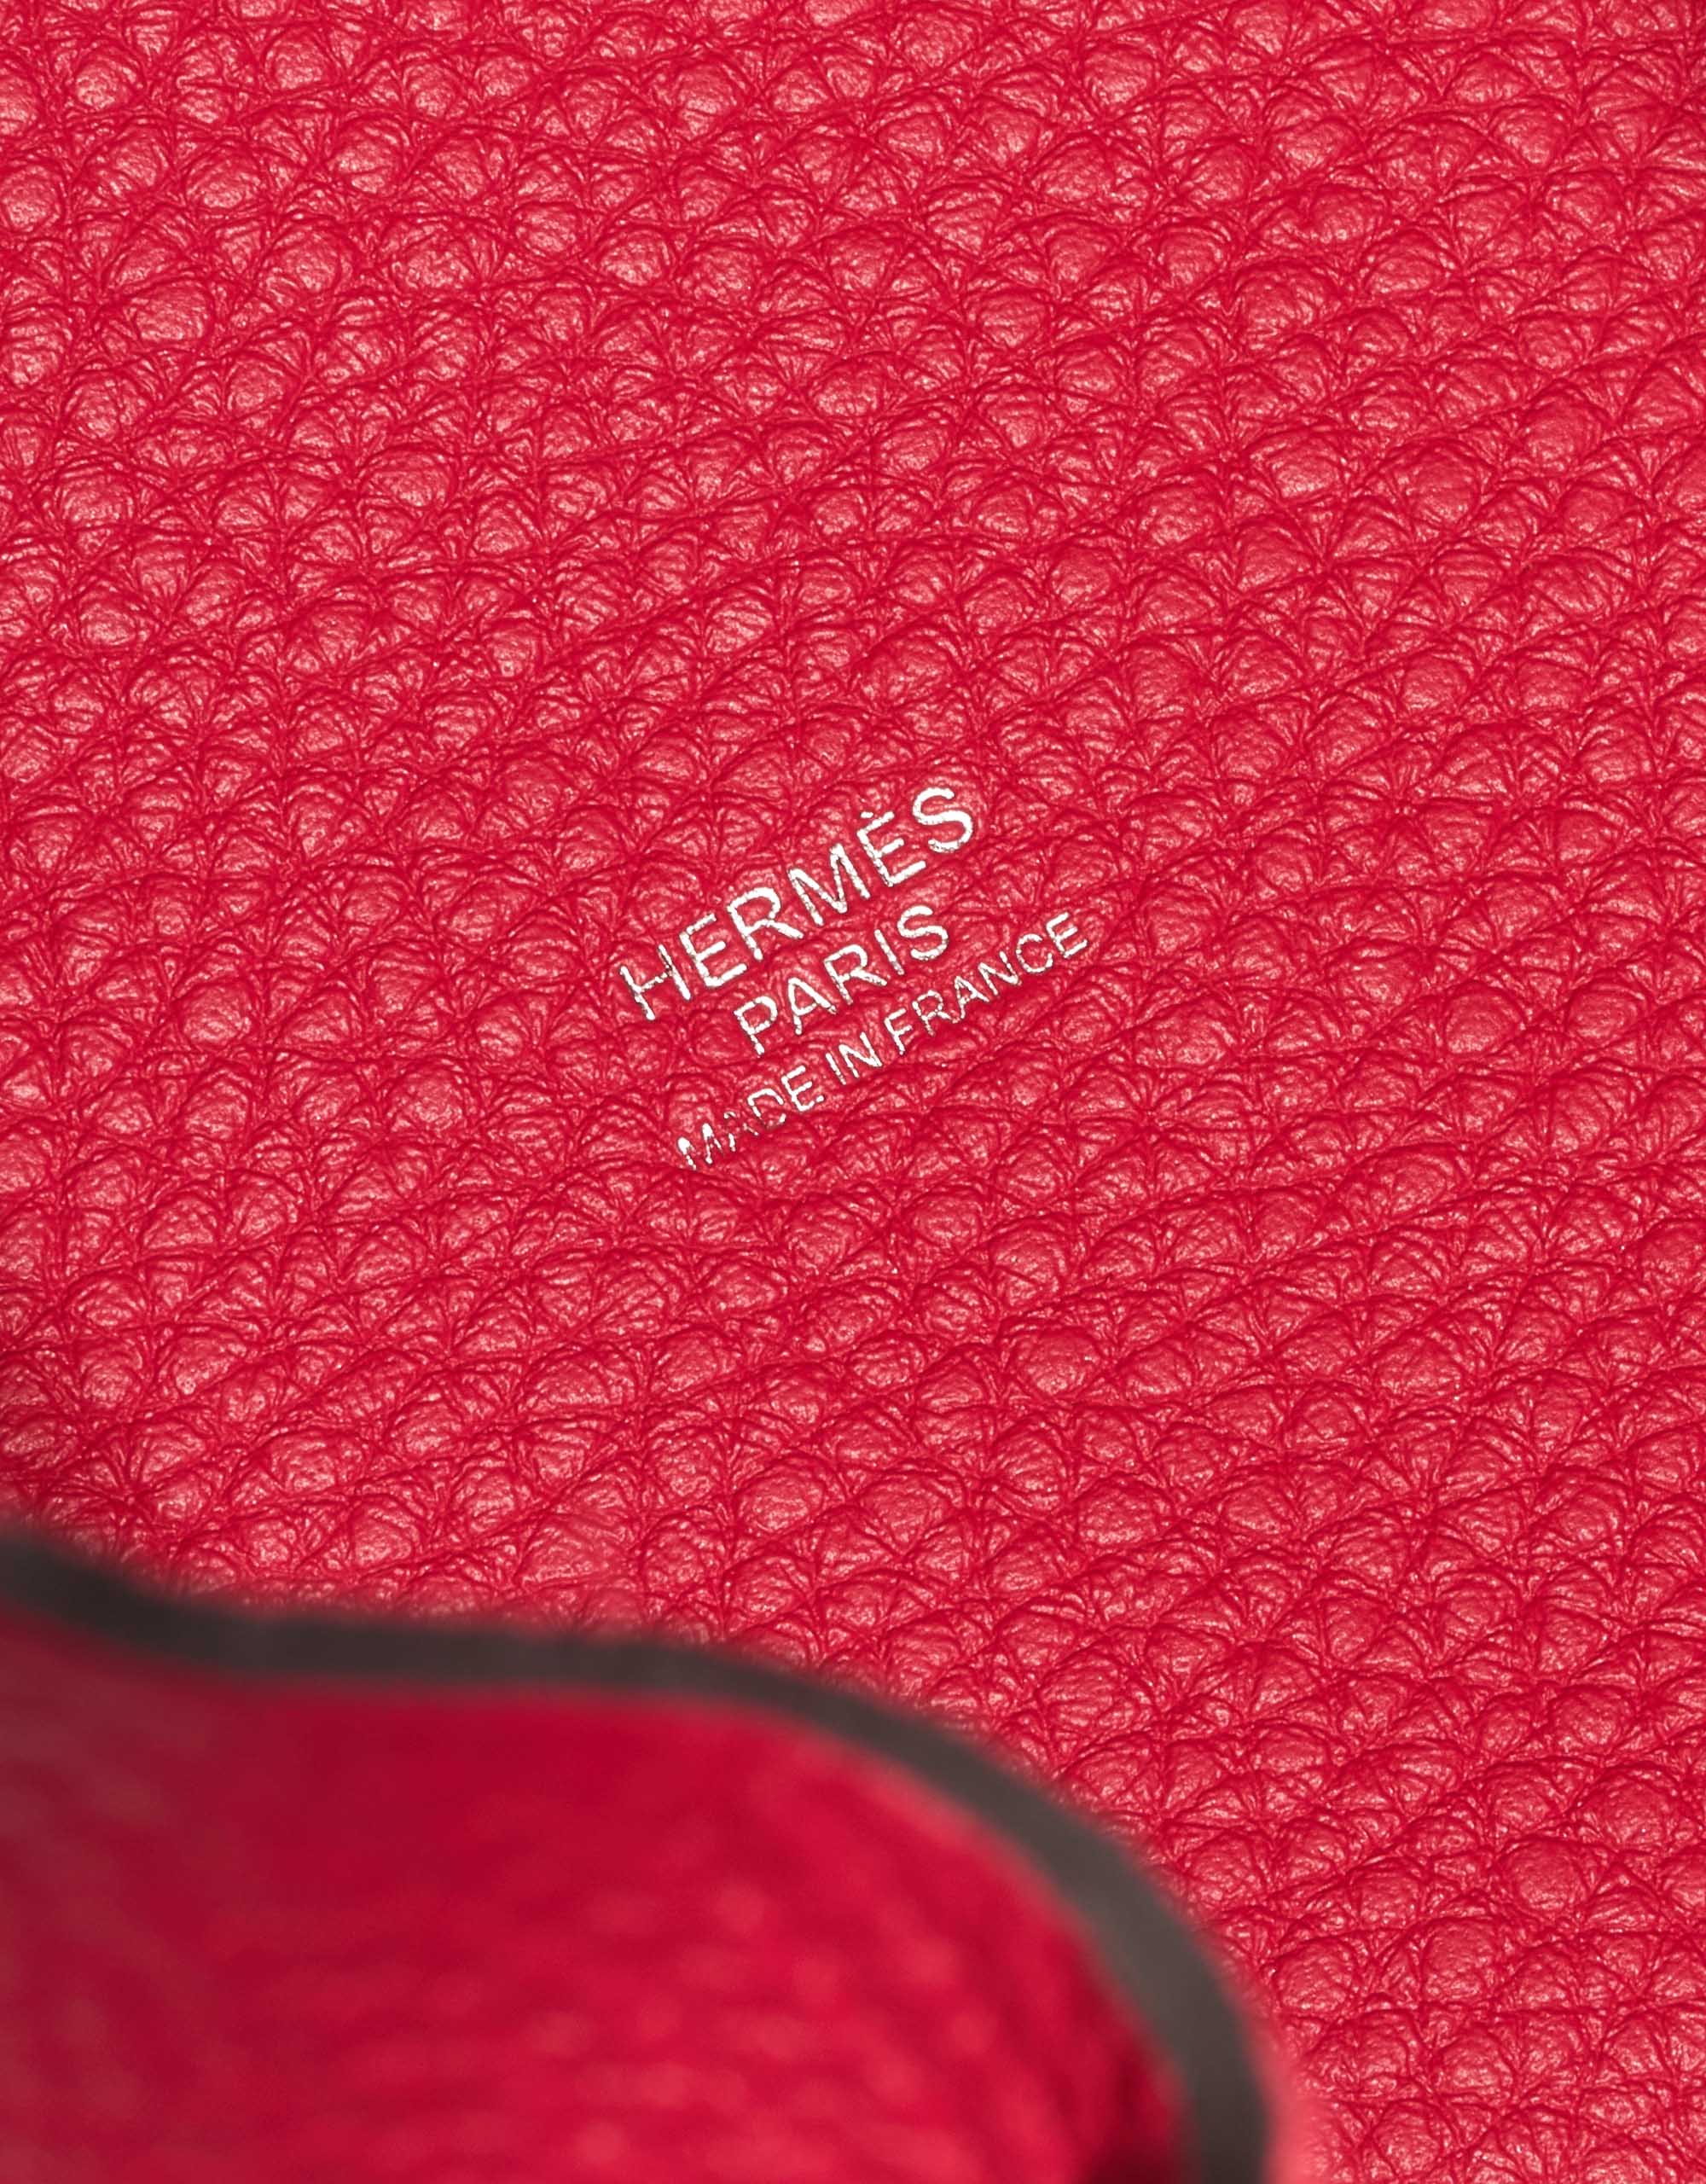 Hermes Picotin Lock Bag 18CM Taurillon Clemence Leather Palladium Hardware,  0G Rouge Sellier/CK90 Framboise